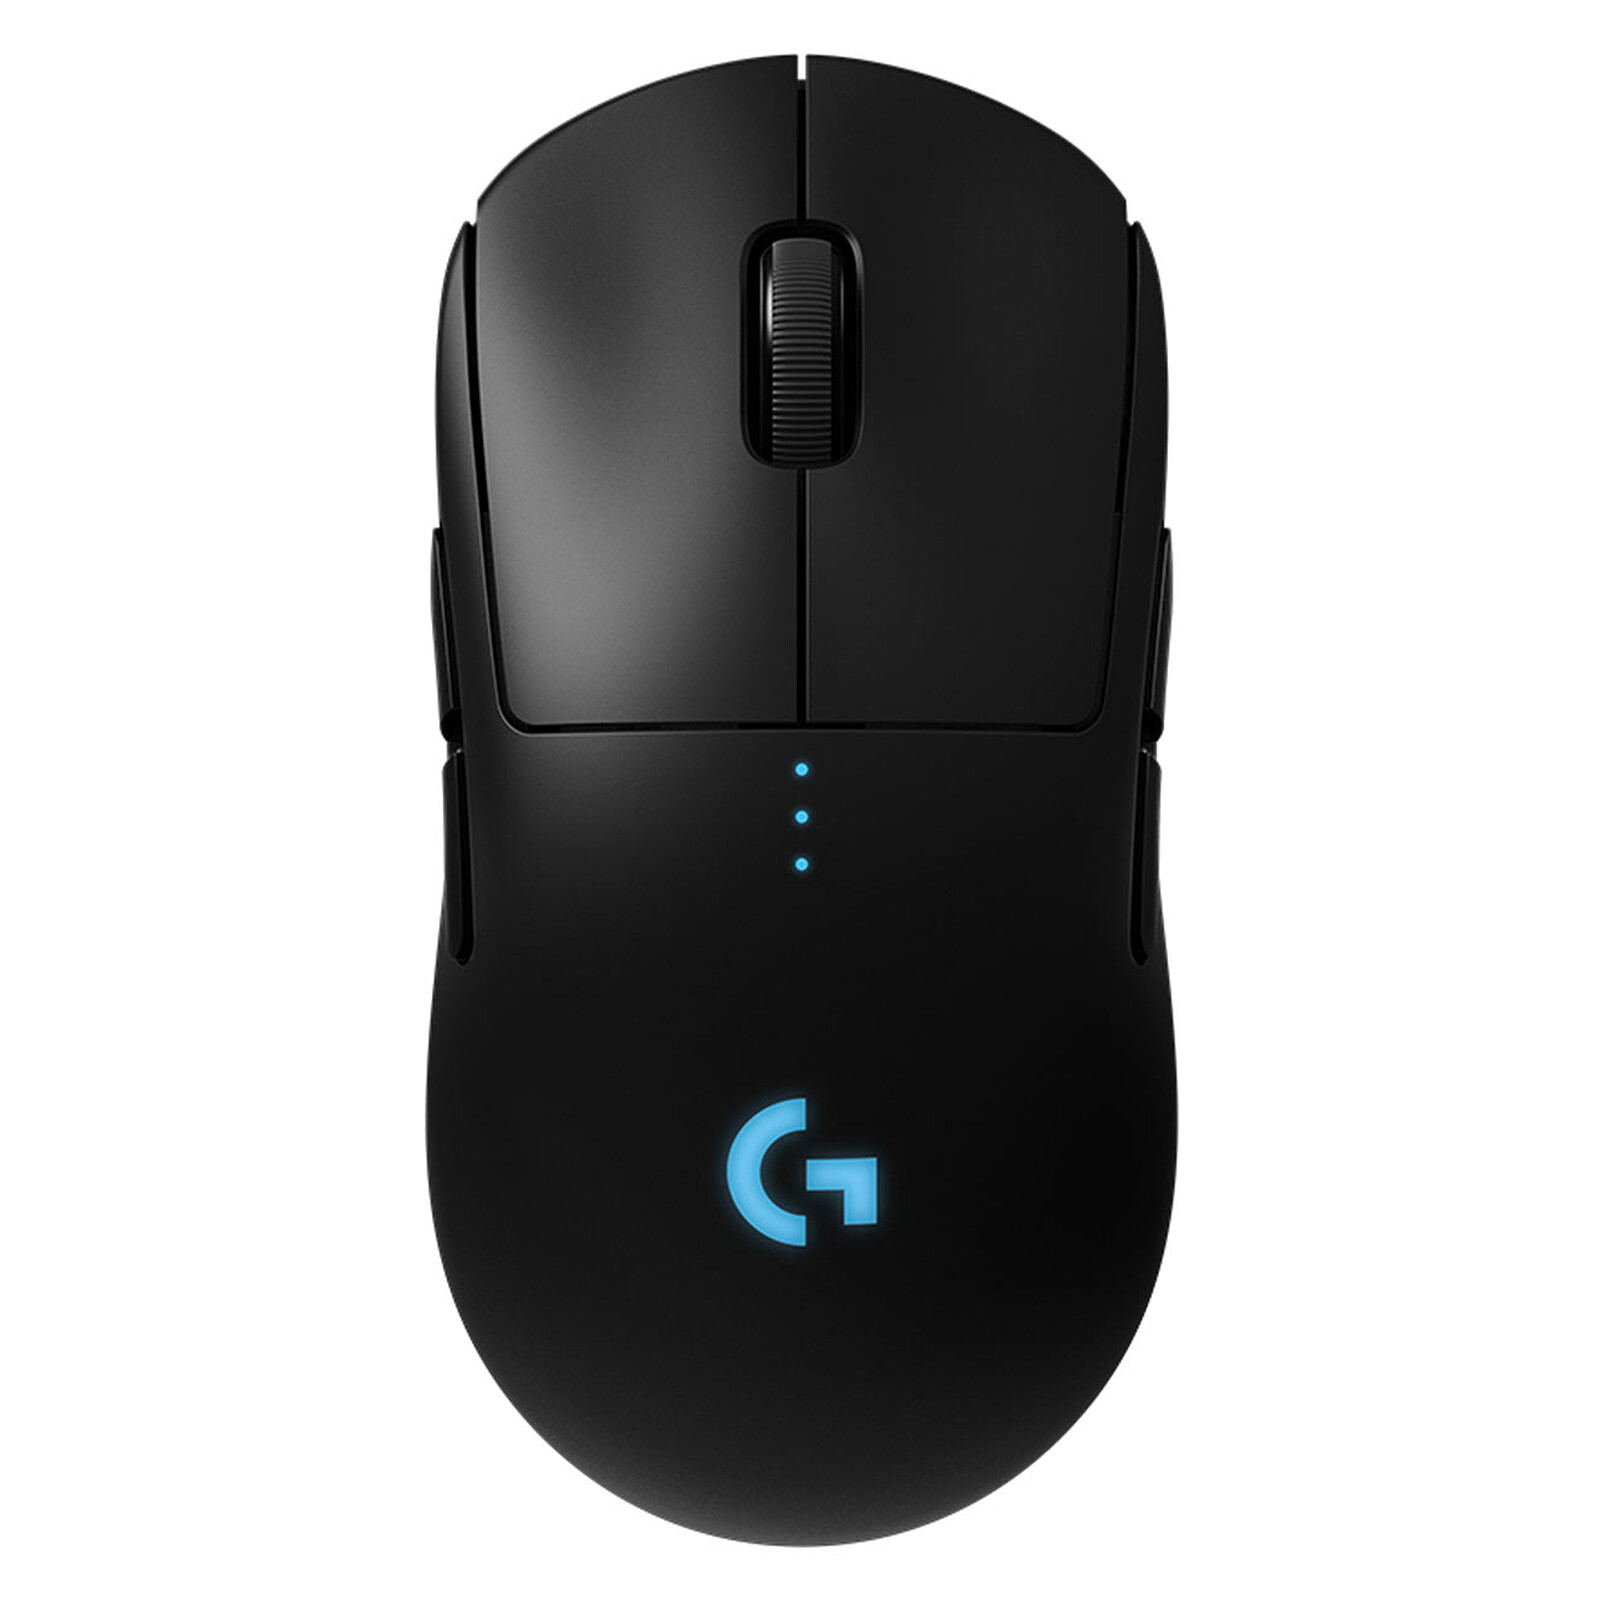 Logitech G Pro Wireless Gaming Mouse (Noir) (910-005273) - Achat